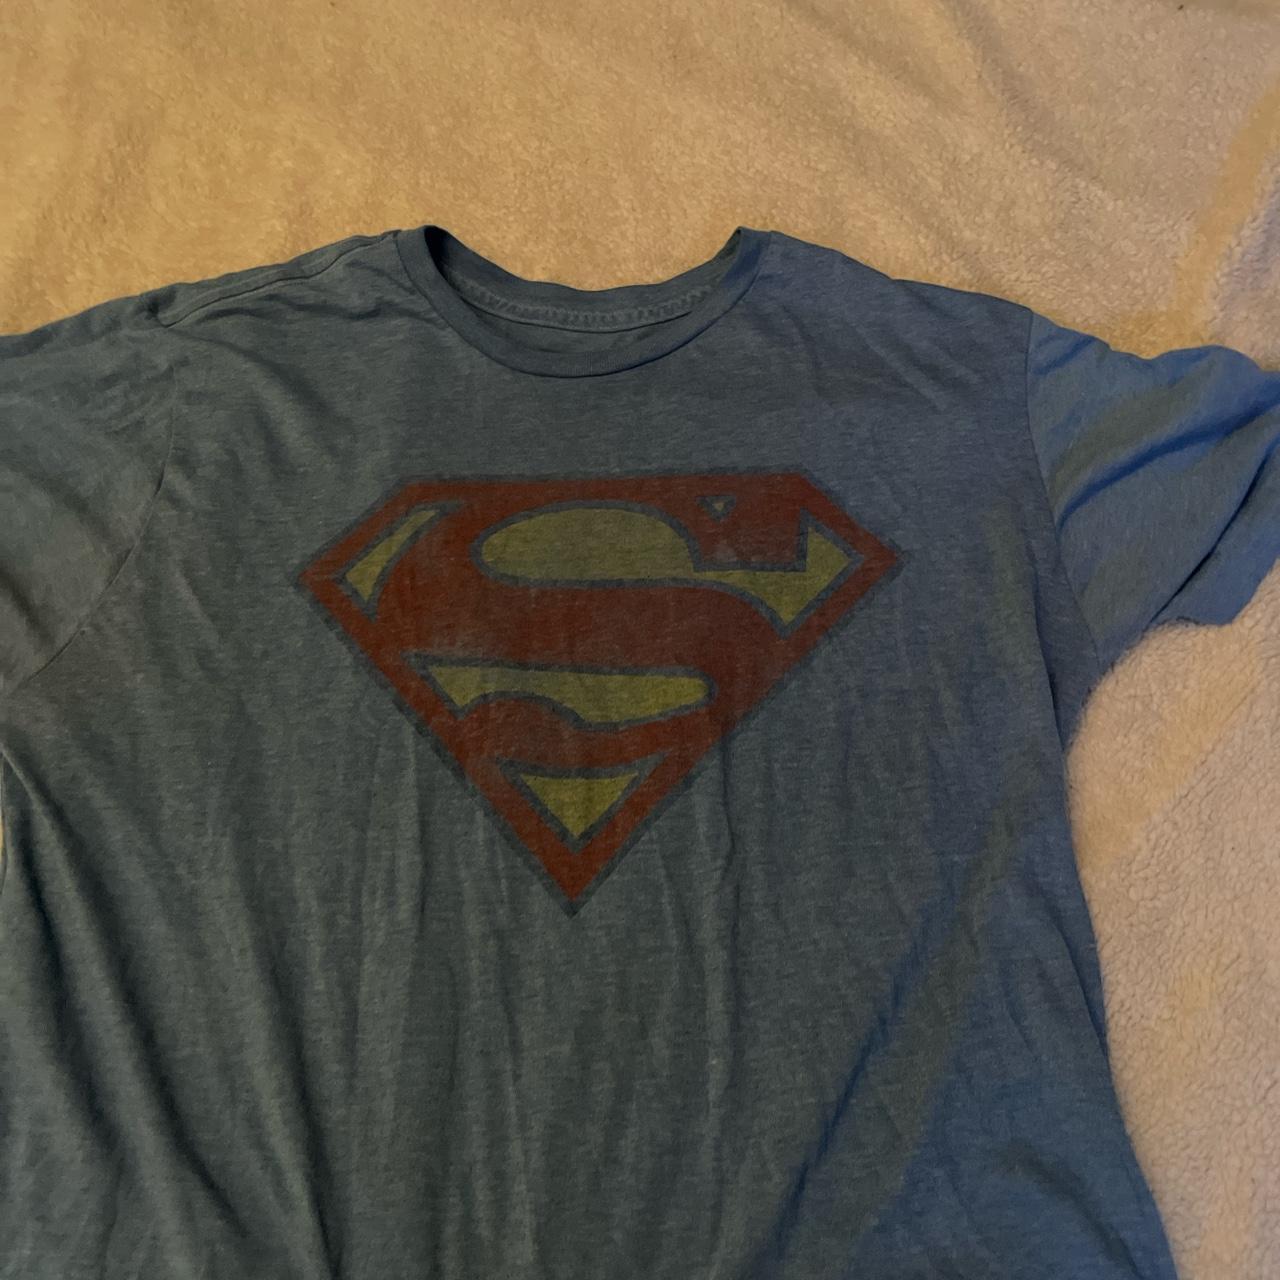 Faded Superman t shirt - Depop